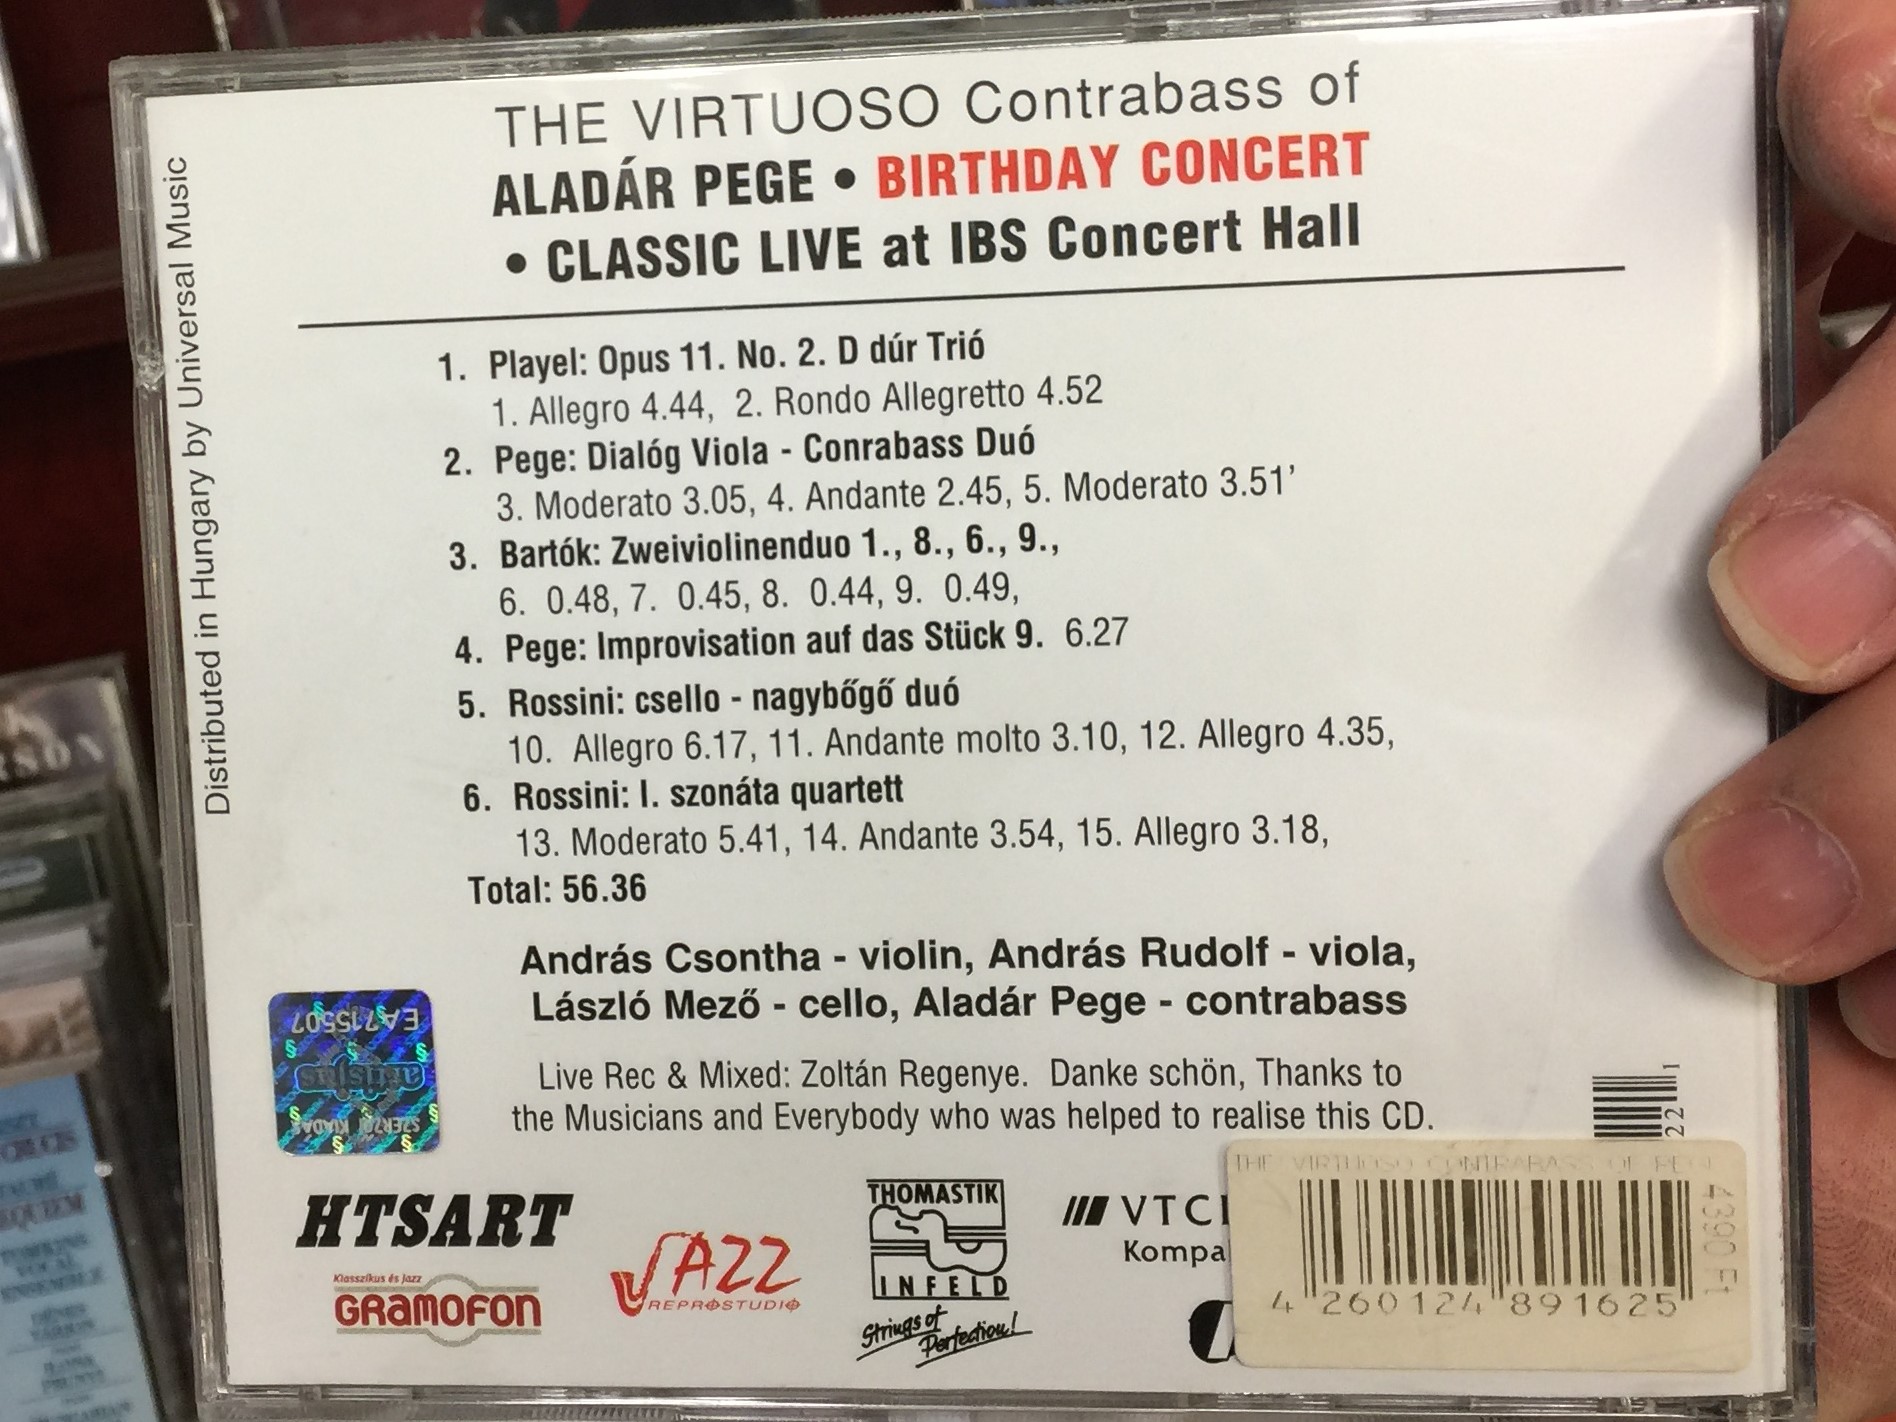 the-virtuoso-contrabass-of-aladar-pege-birthday-concert-classic-live-at-ibs-concert-hall-andras-csontha-violin-aladar-pege-contrabass-andras-rudolf-viola-laszlo-mezo-cello-univer.jpg